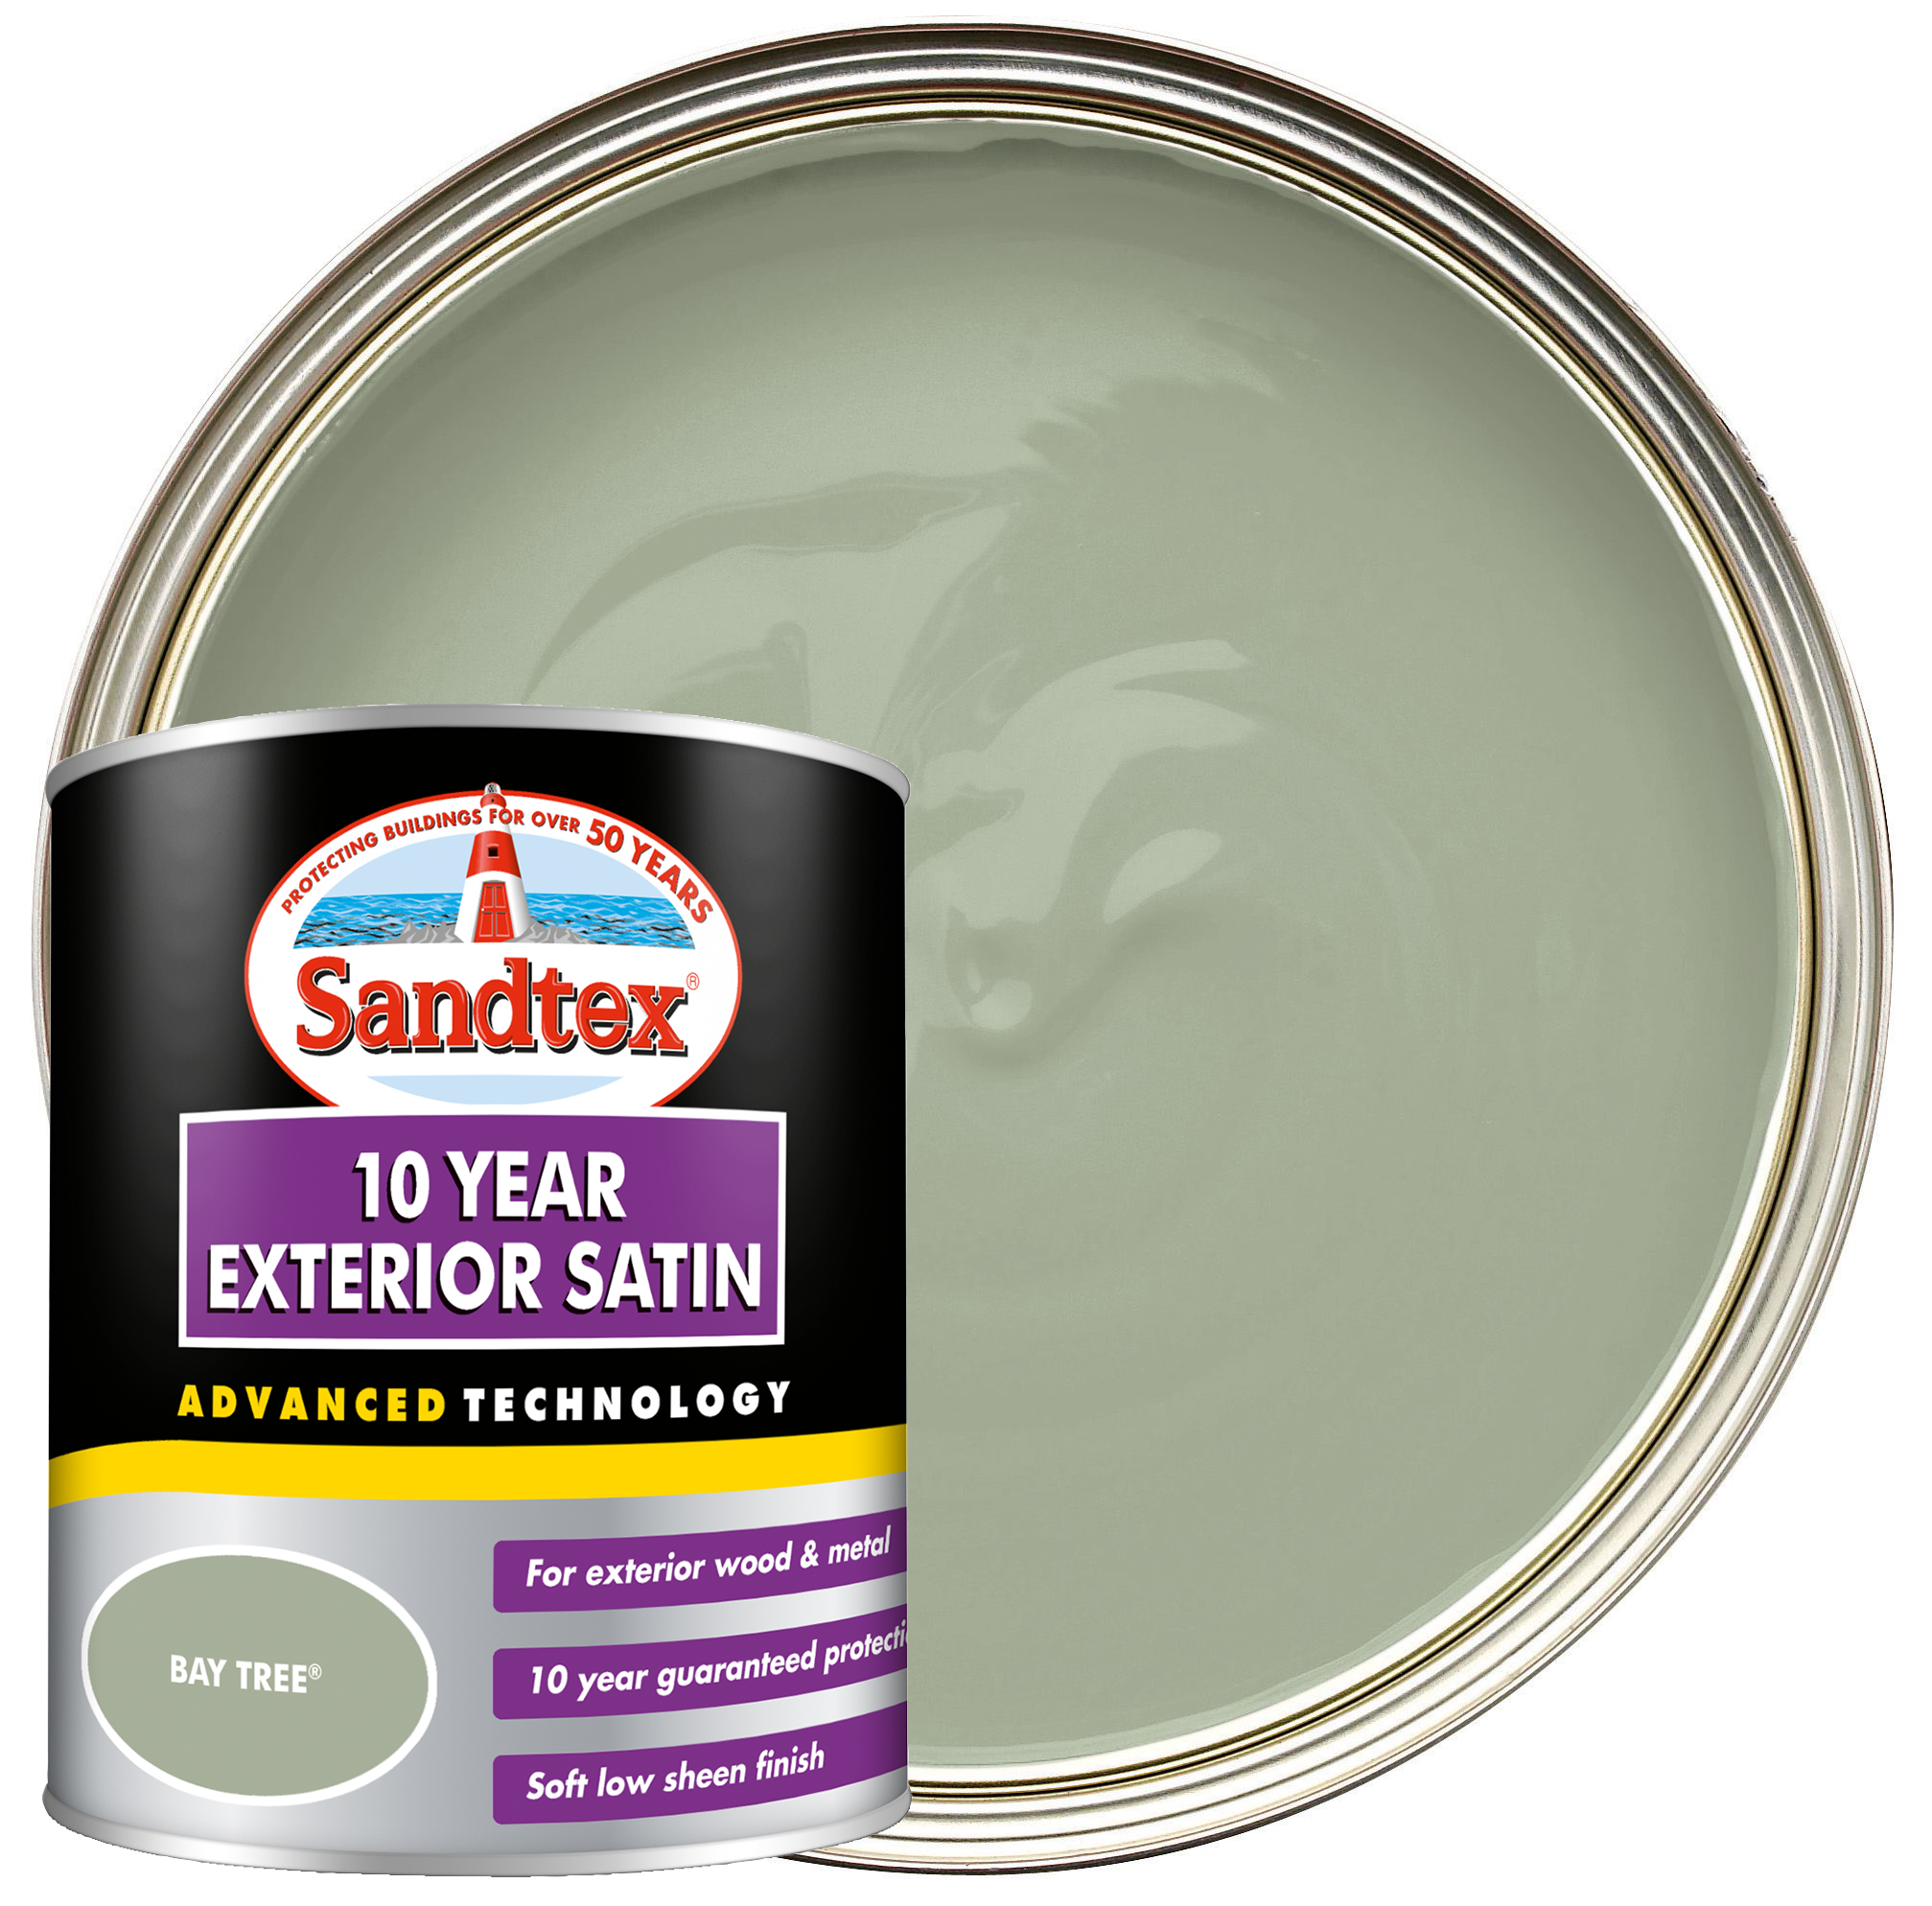 Sandtex 10 Year Exterior Satin Paint - Bay